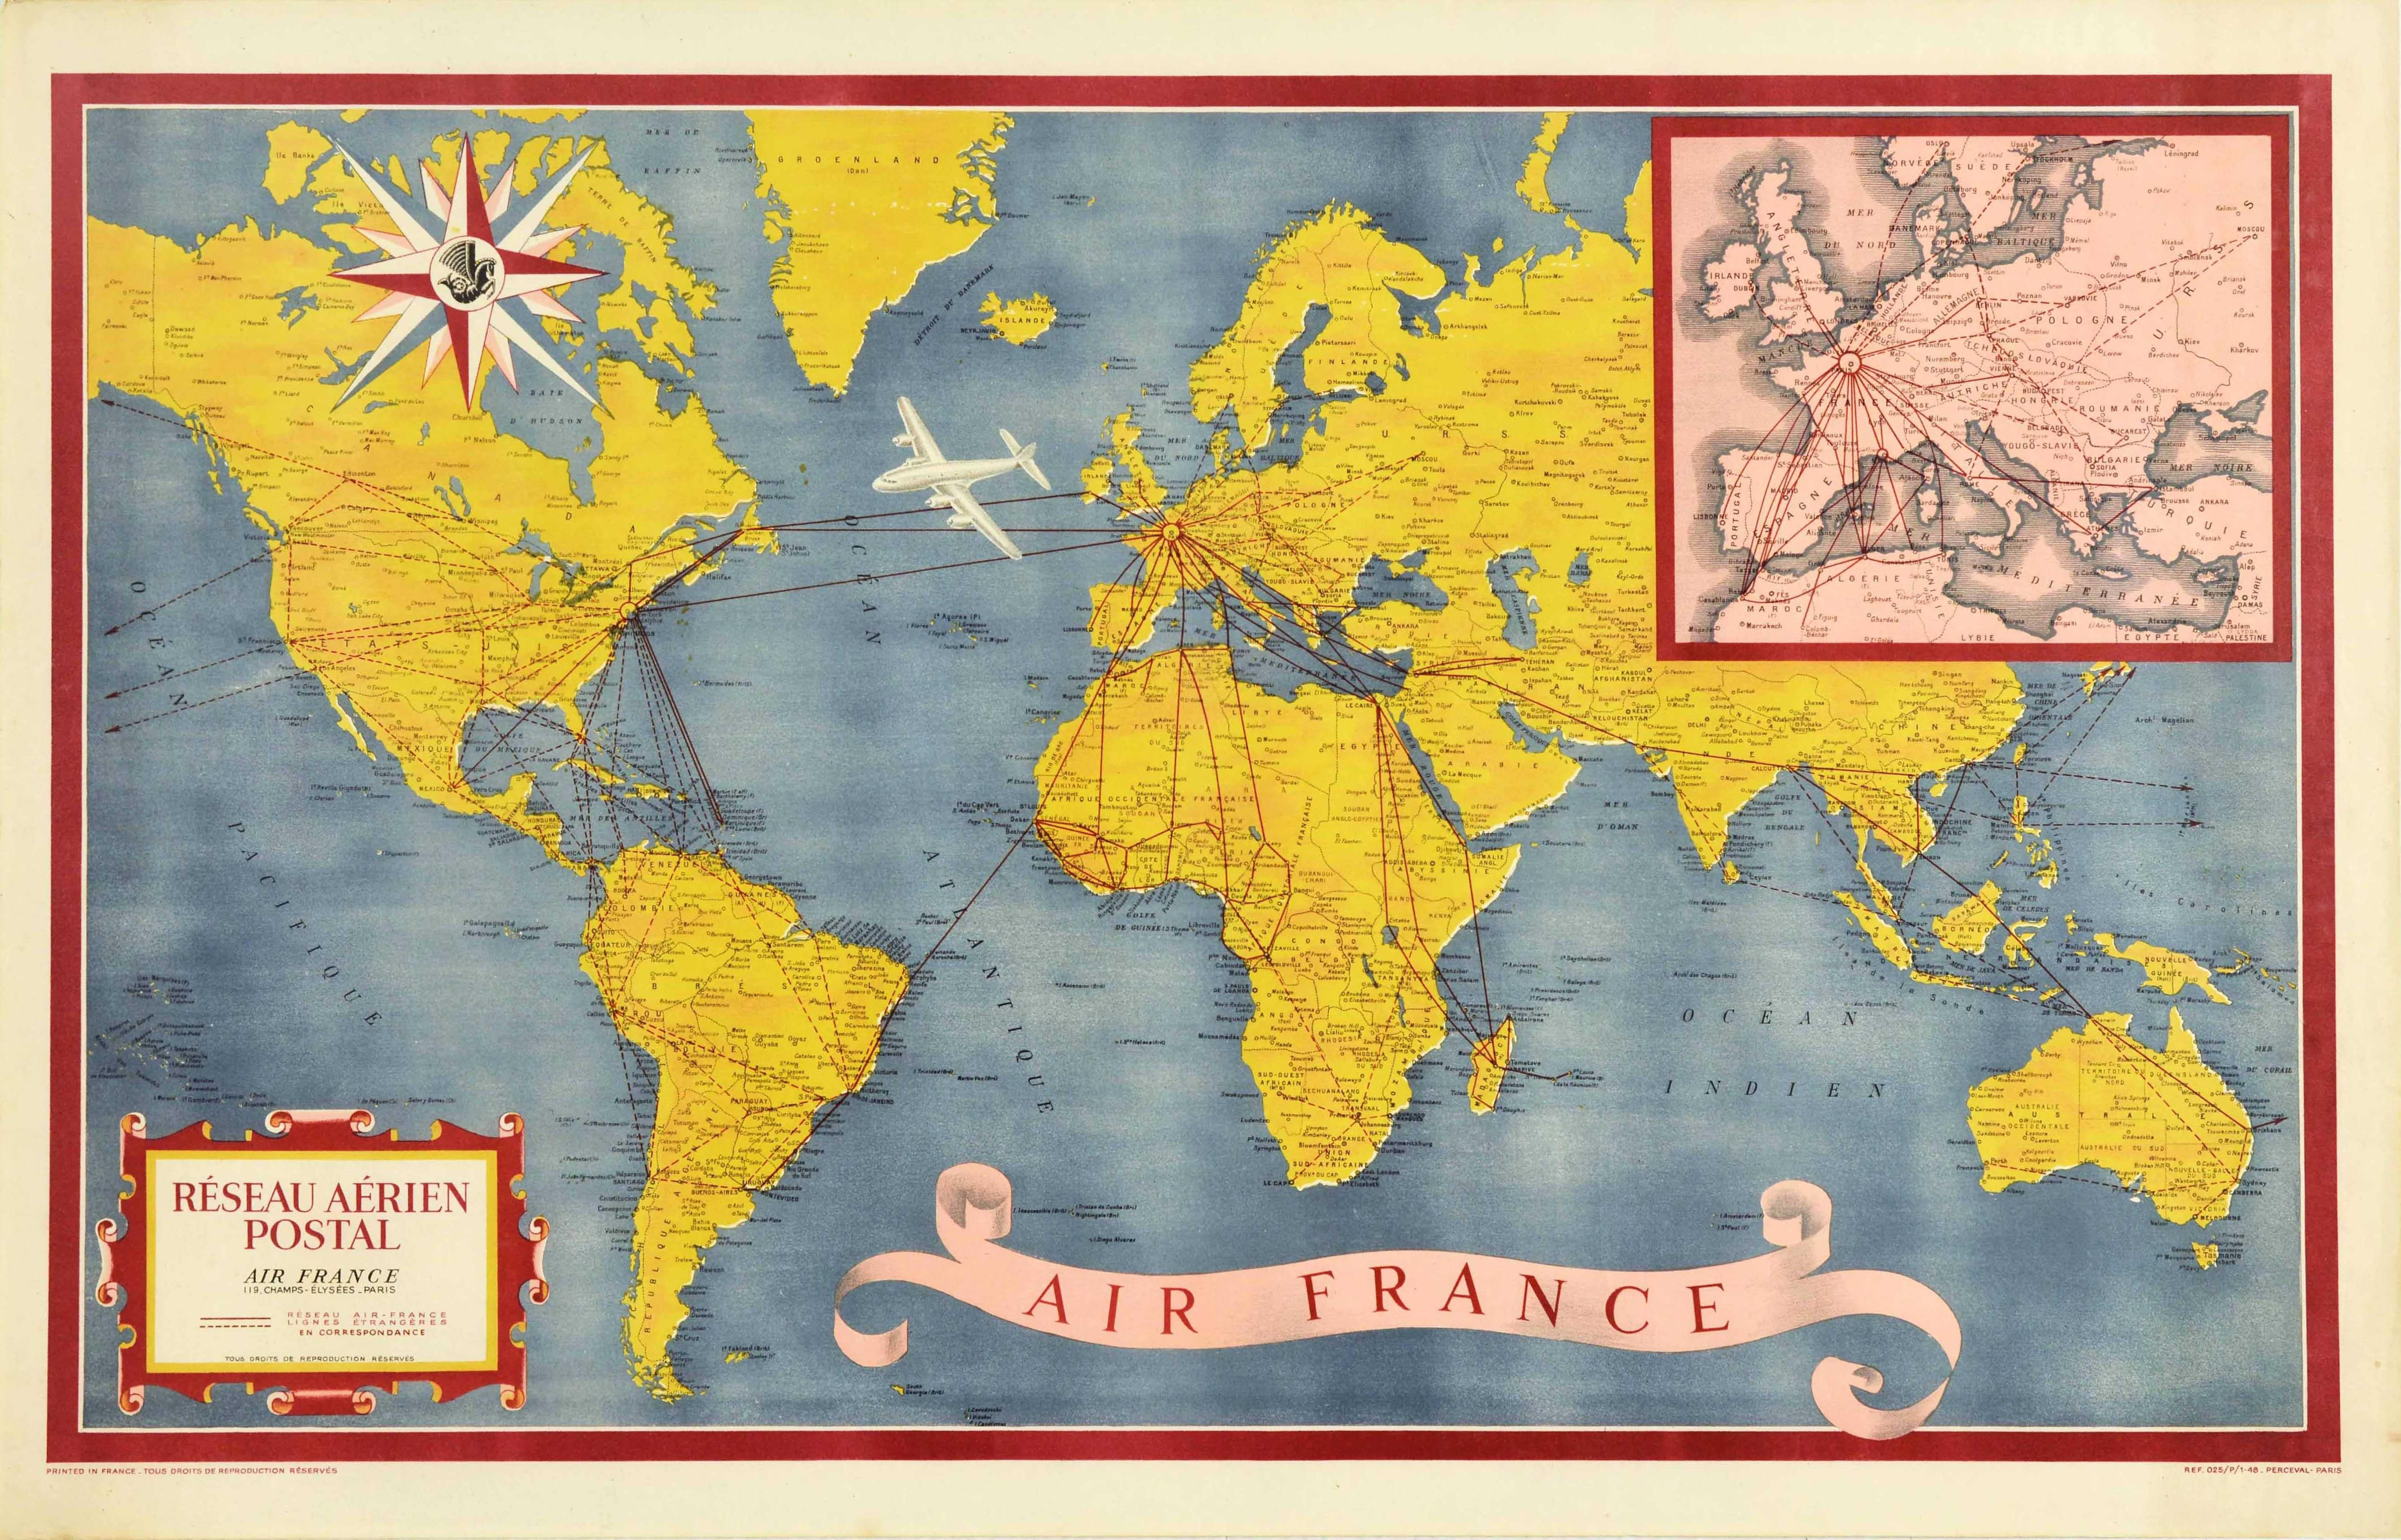 Unknown Print - Original Vintage Travel Poster Air France World Map Postal Network Reseau Aerian